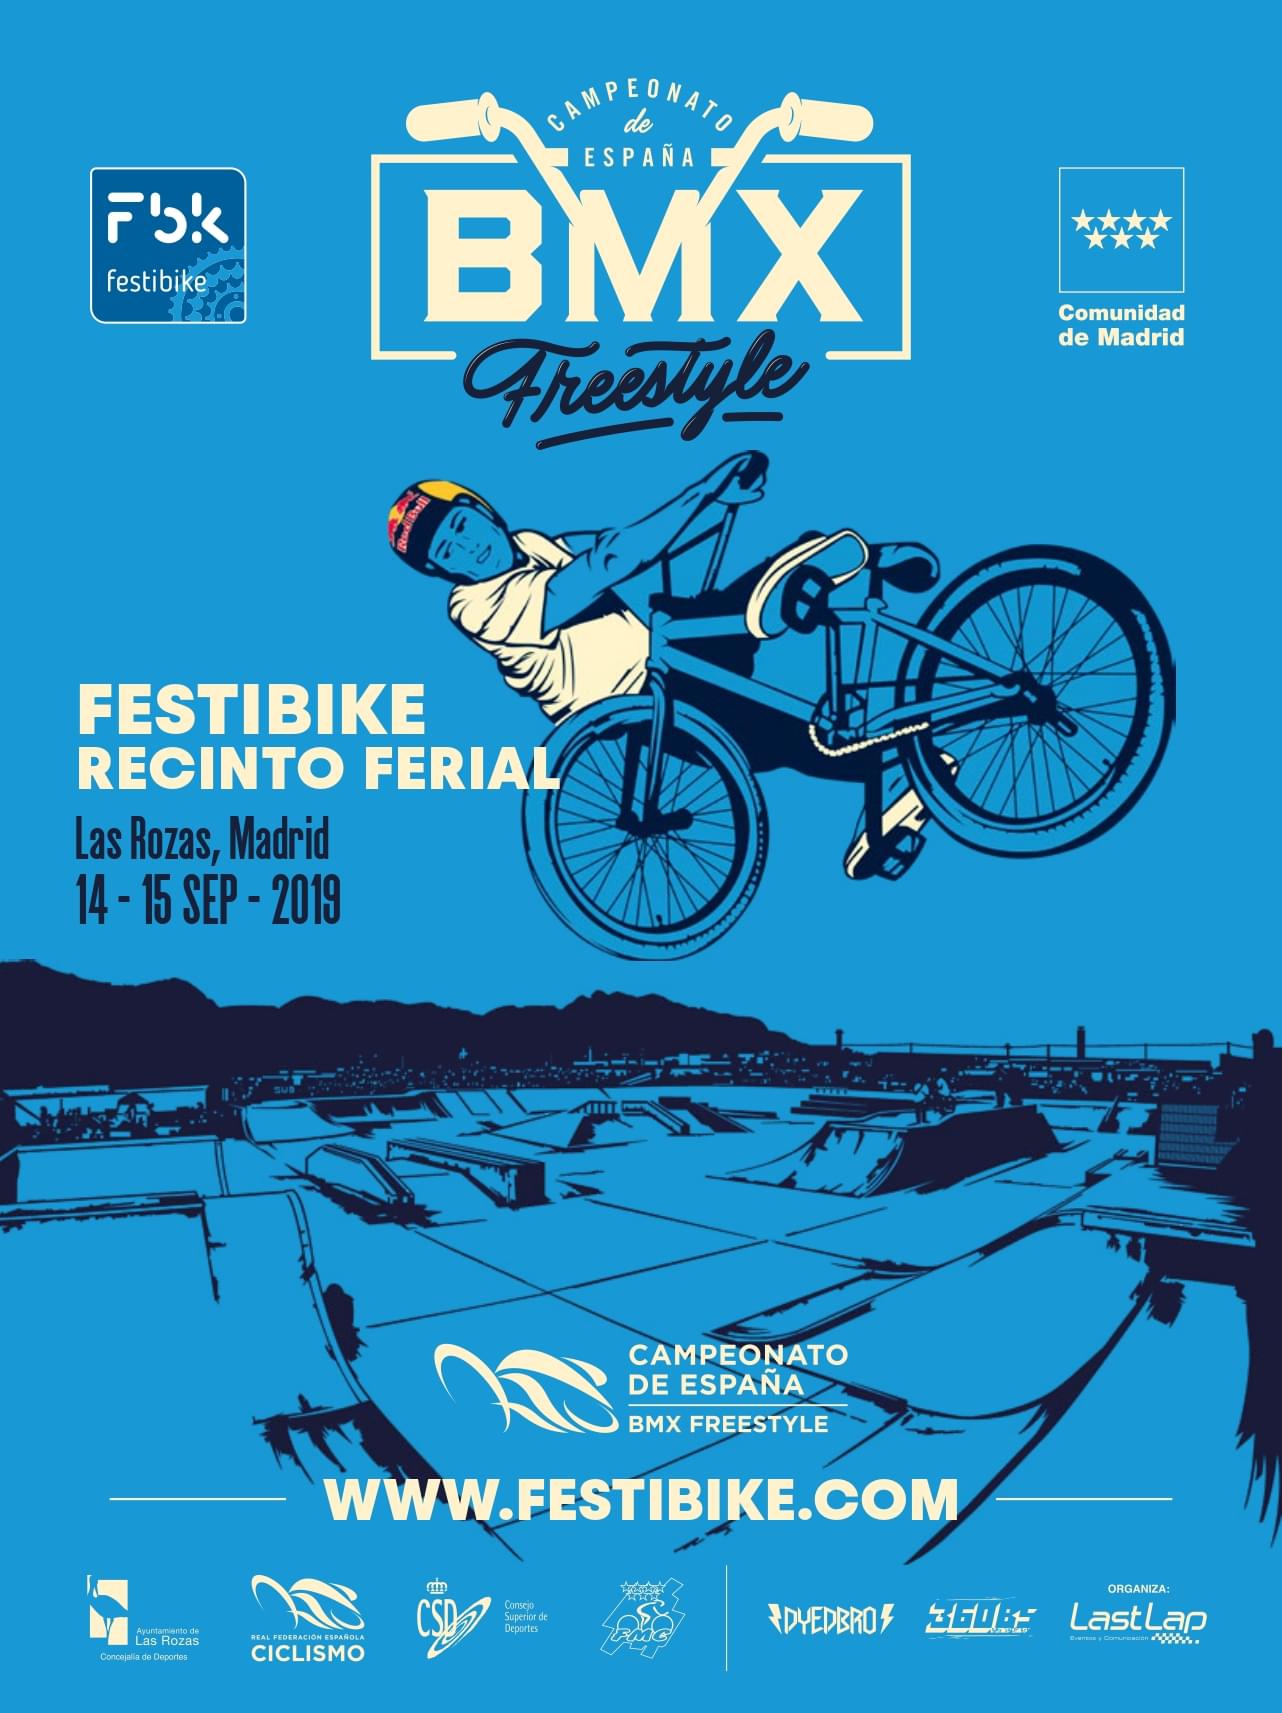 Festibike acoge los Campeonatos de España de BMX Freestyle